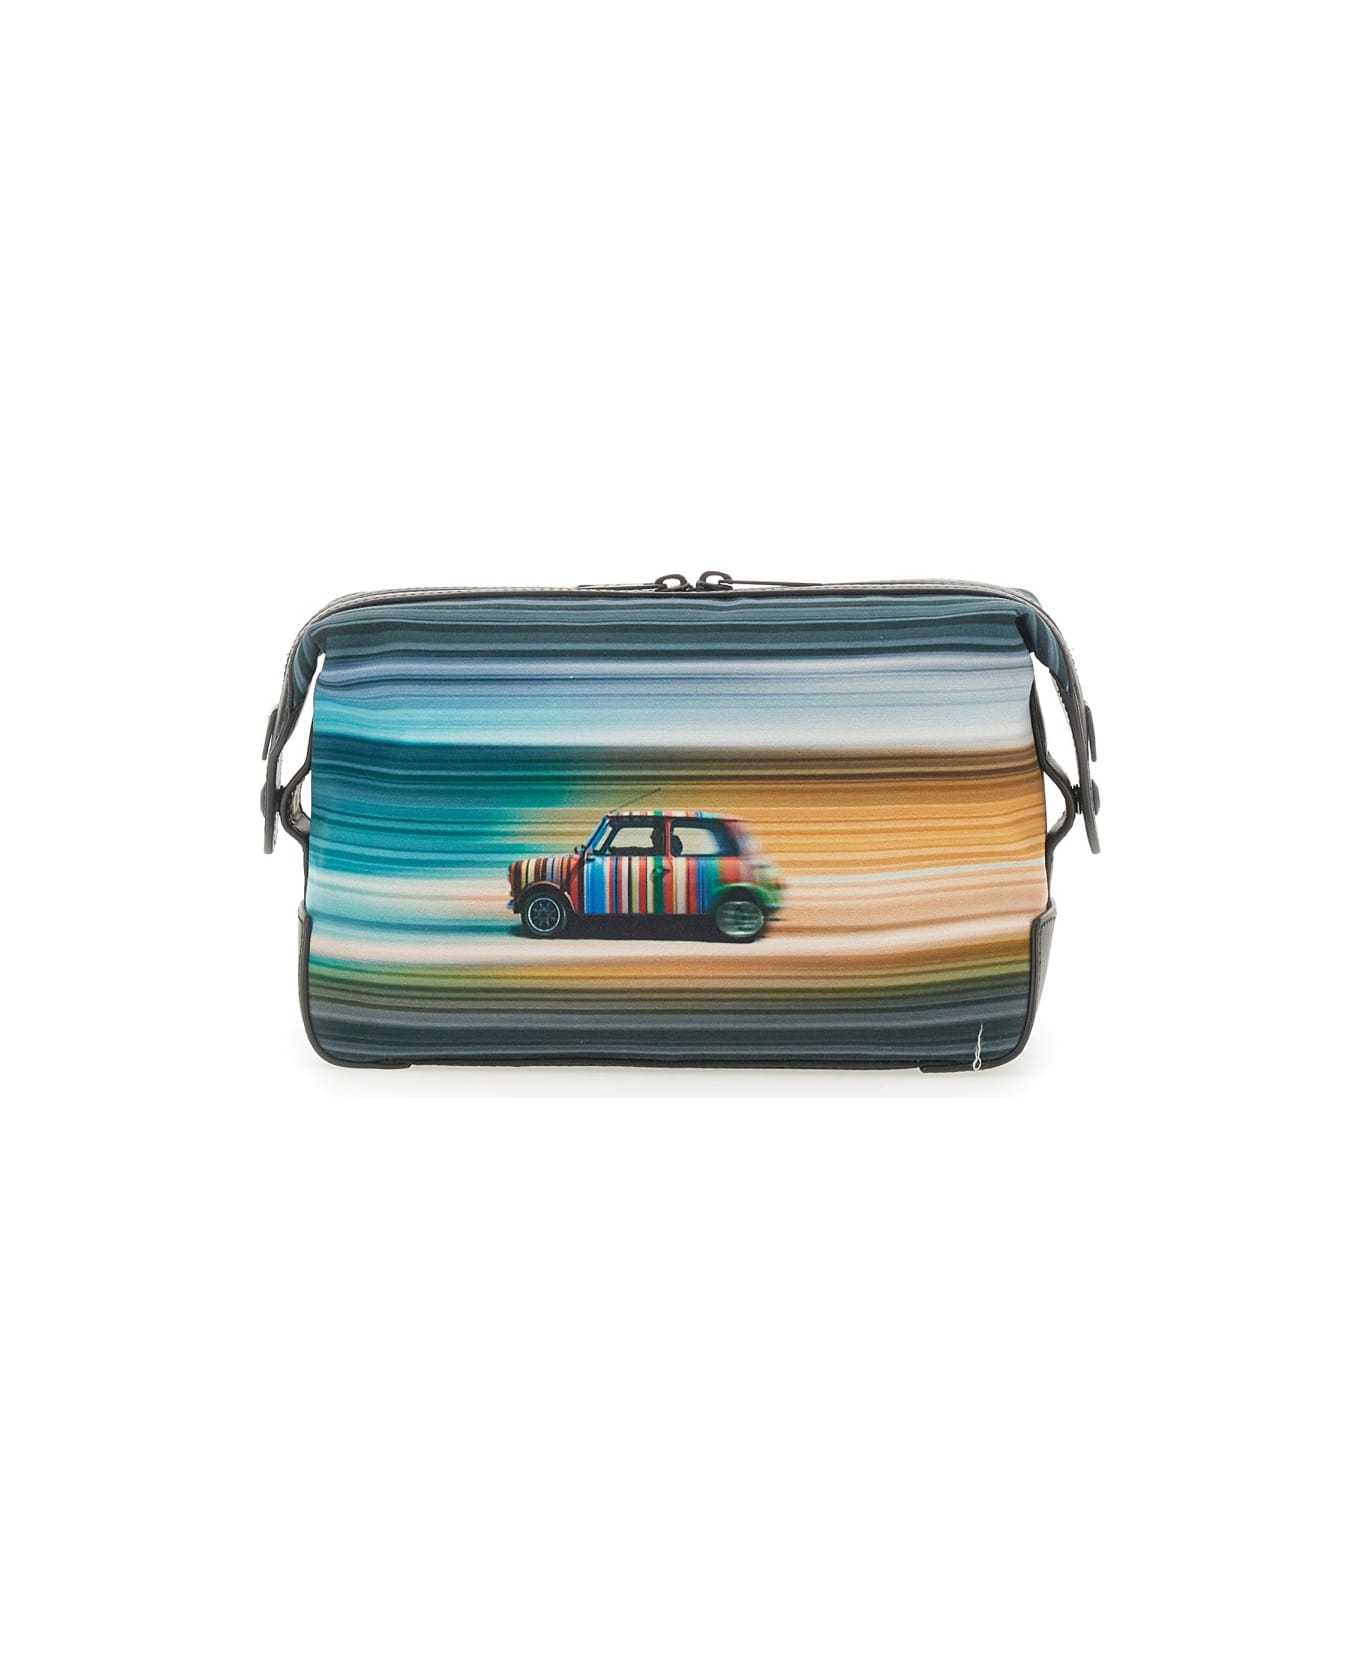 Paul Smith "mini Blur" Travel Clutch Bag - MULTICOLOUR